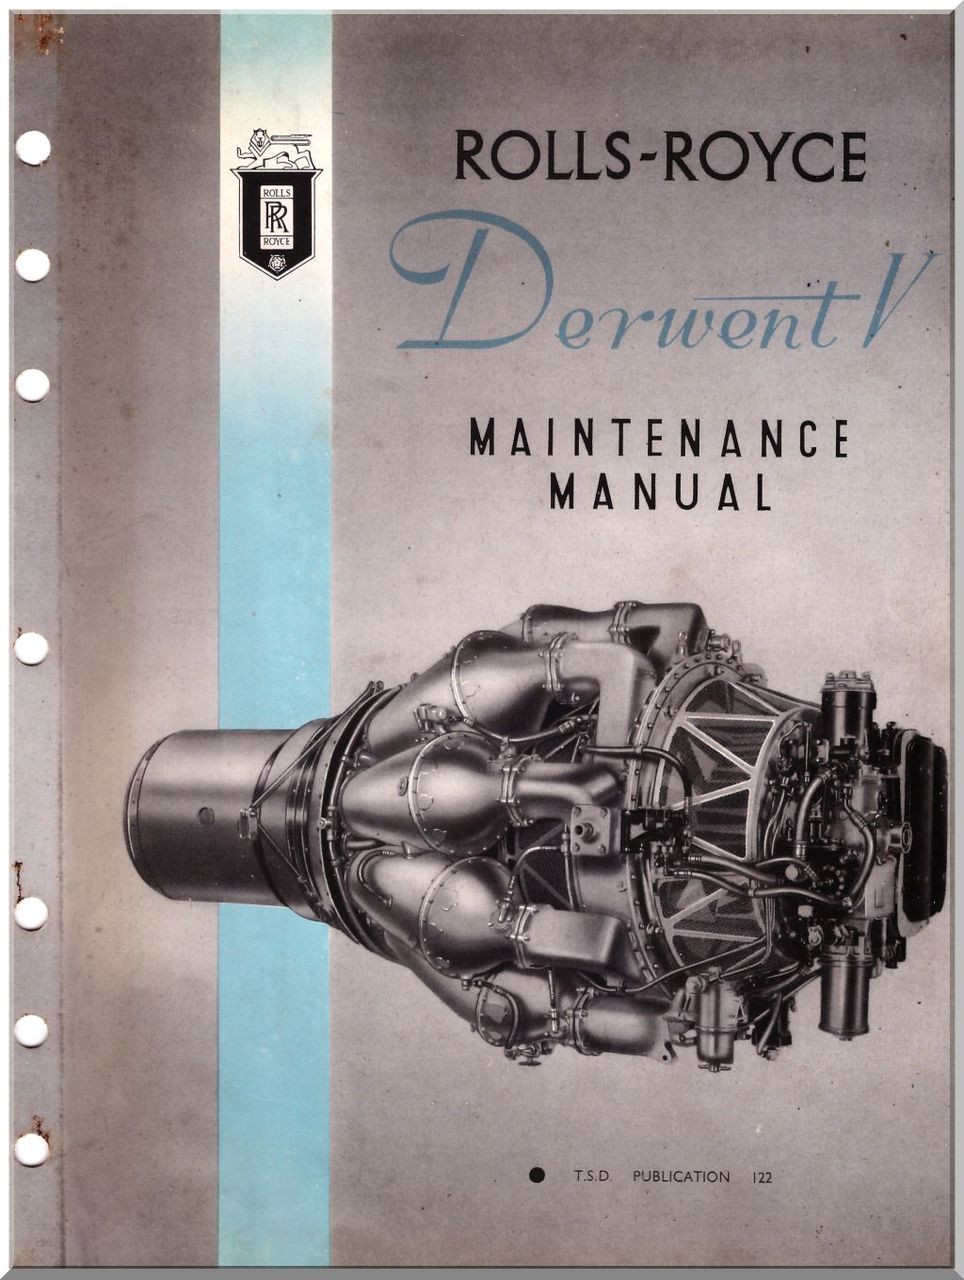 RollsRoyce Avon 520 Engine Maintenance Manual  eBay